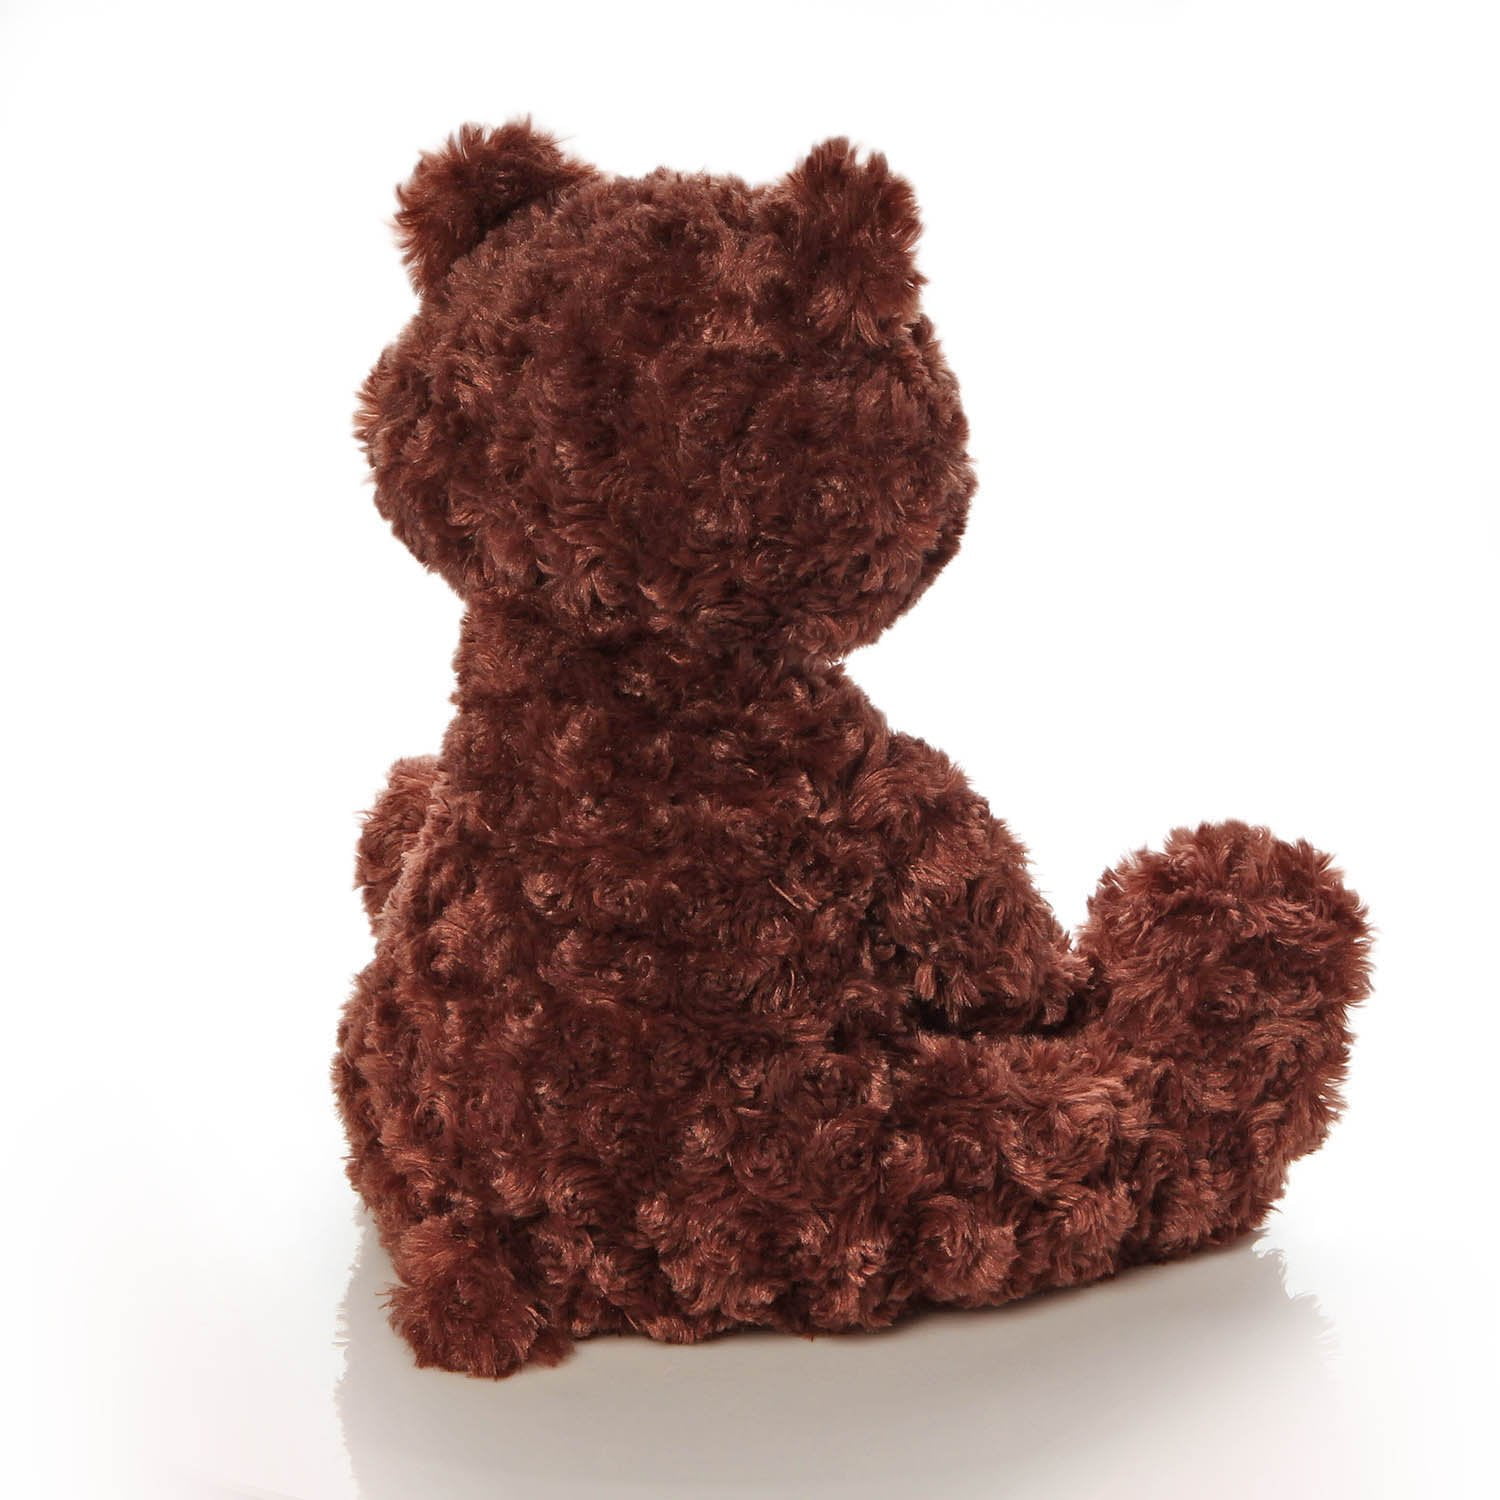 Chocolate Teddy Bear GUND Philbin 12 for sale online 